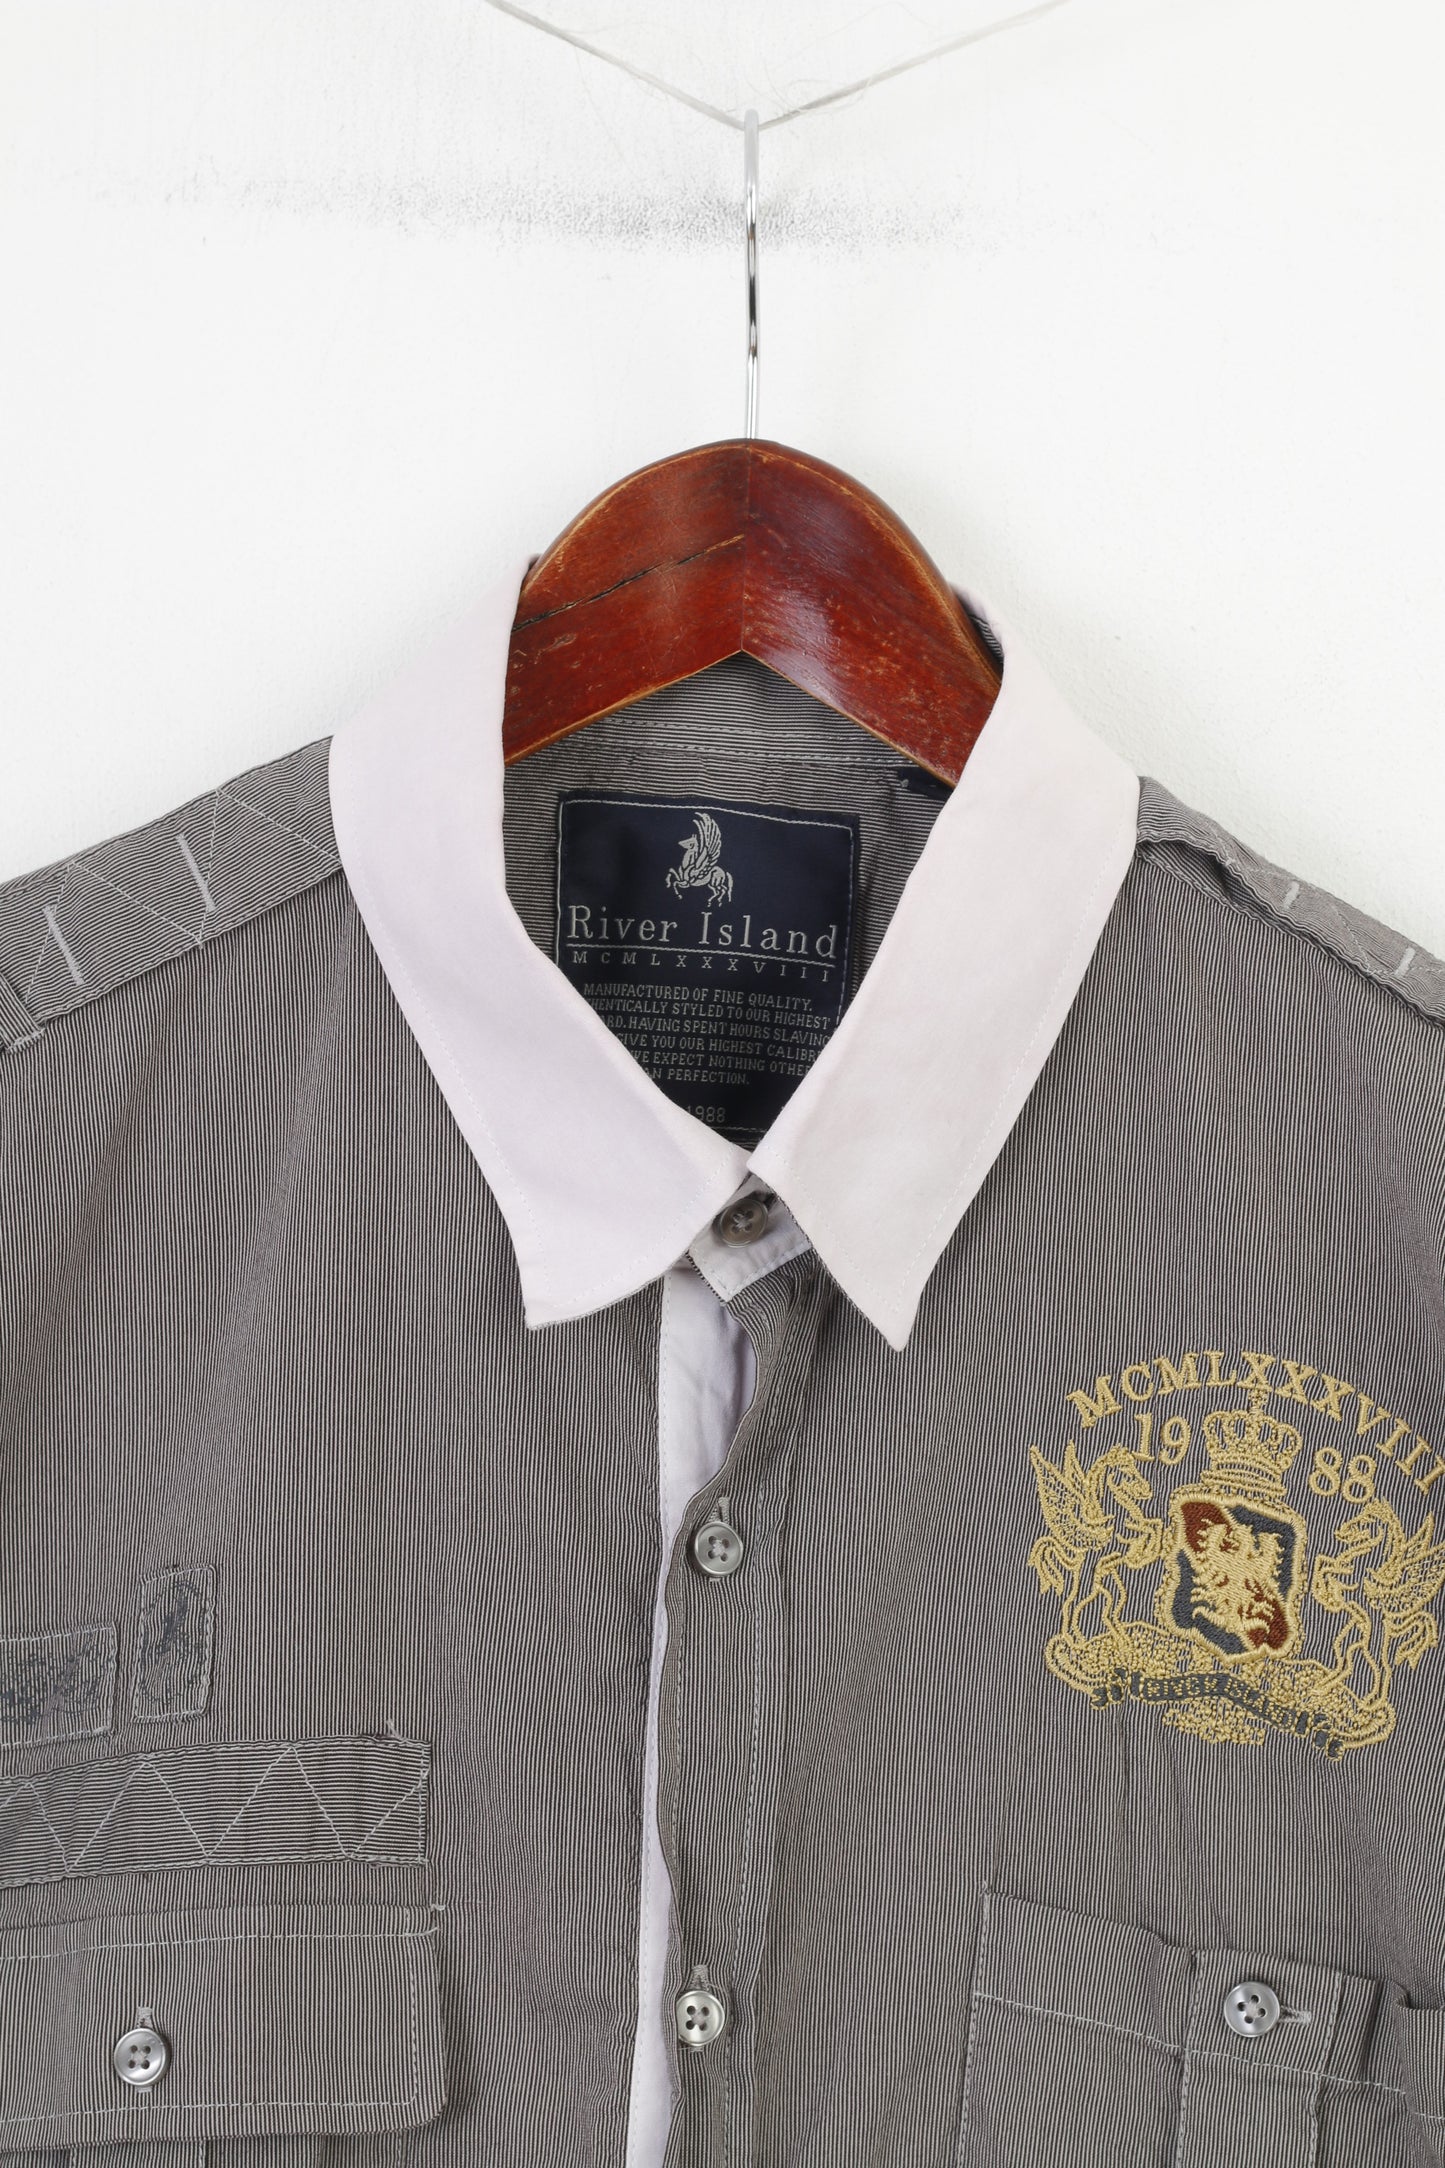 River Island Men XL Casual Shirt Black Striped Long Sleeve Cotton Classic Top